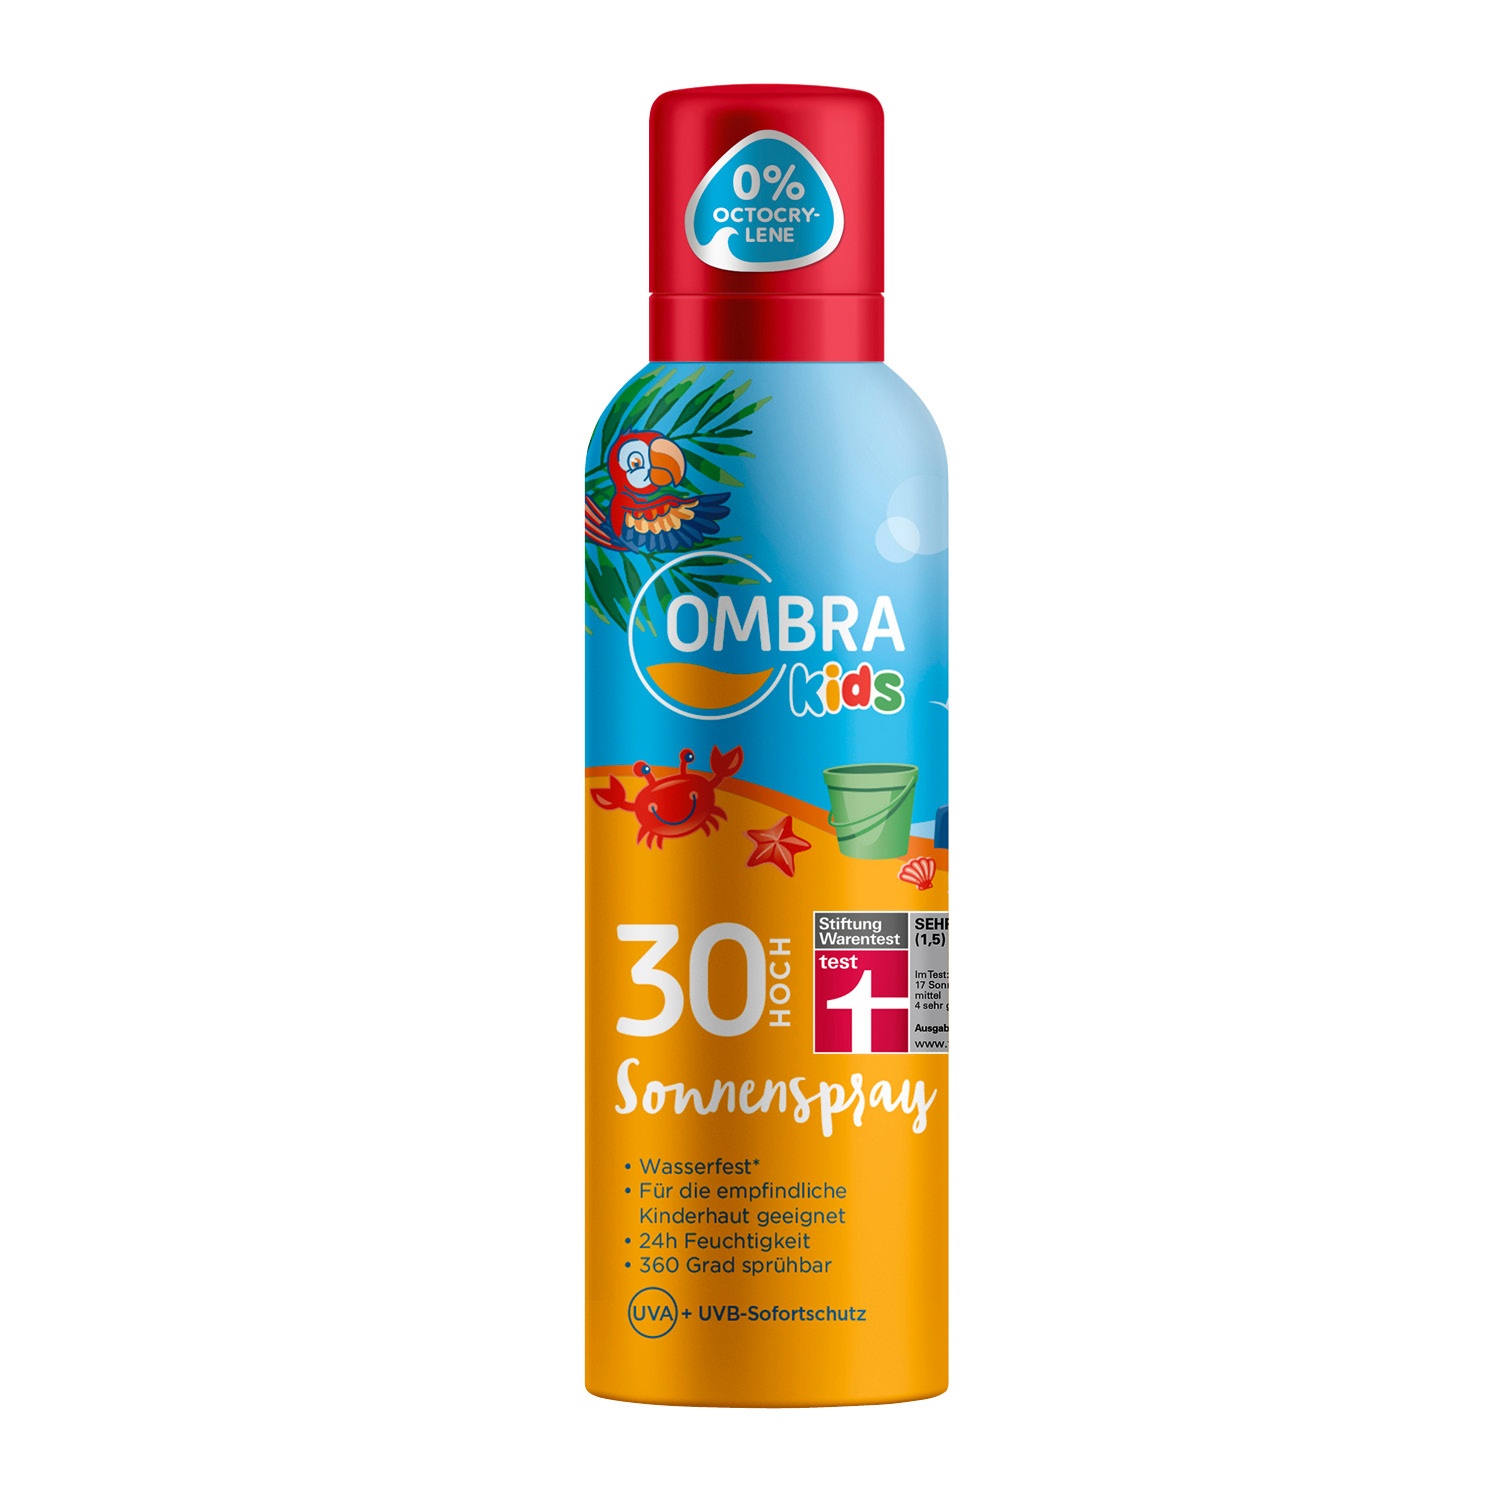 OMBRA sun Sonnenspray Easy Protect LSF 30 150 ml